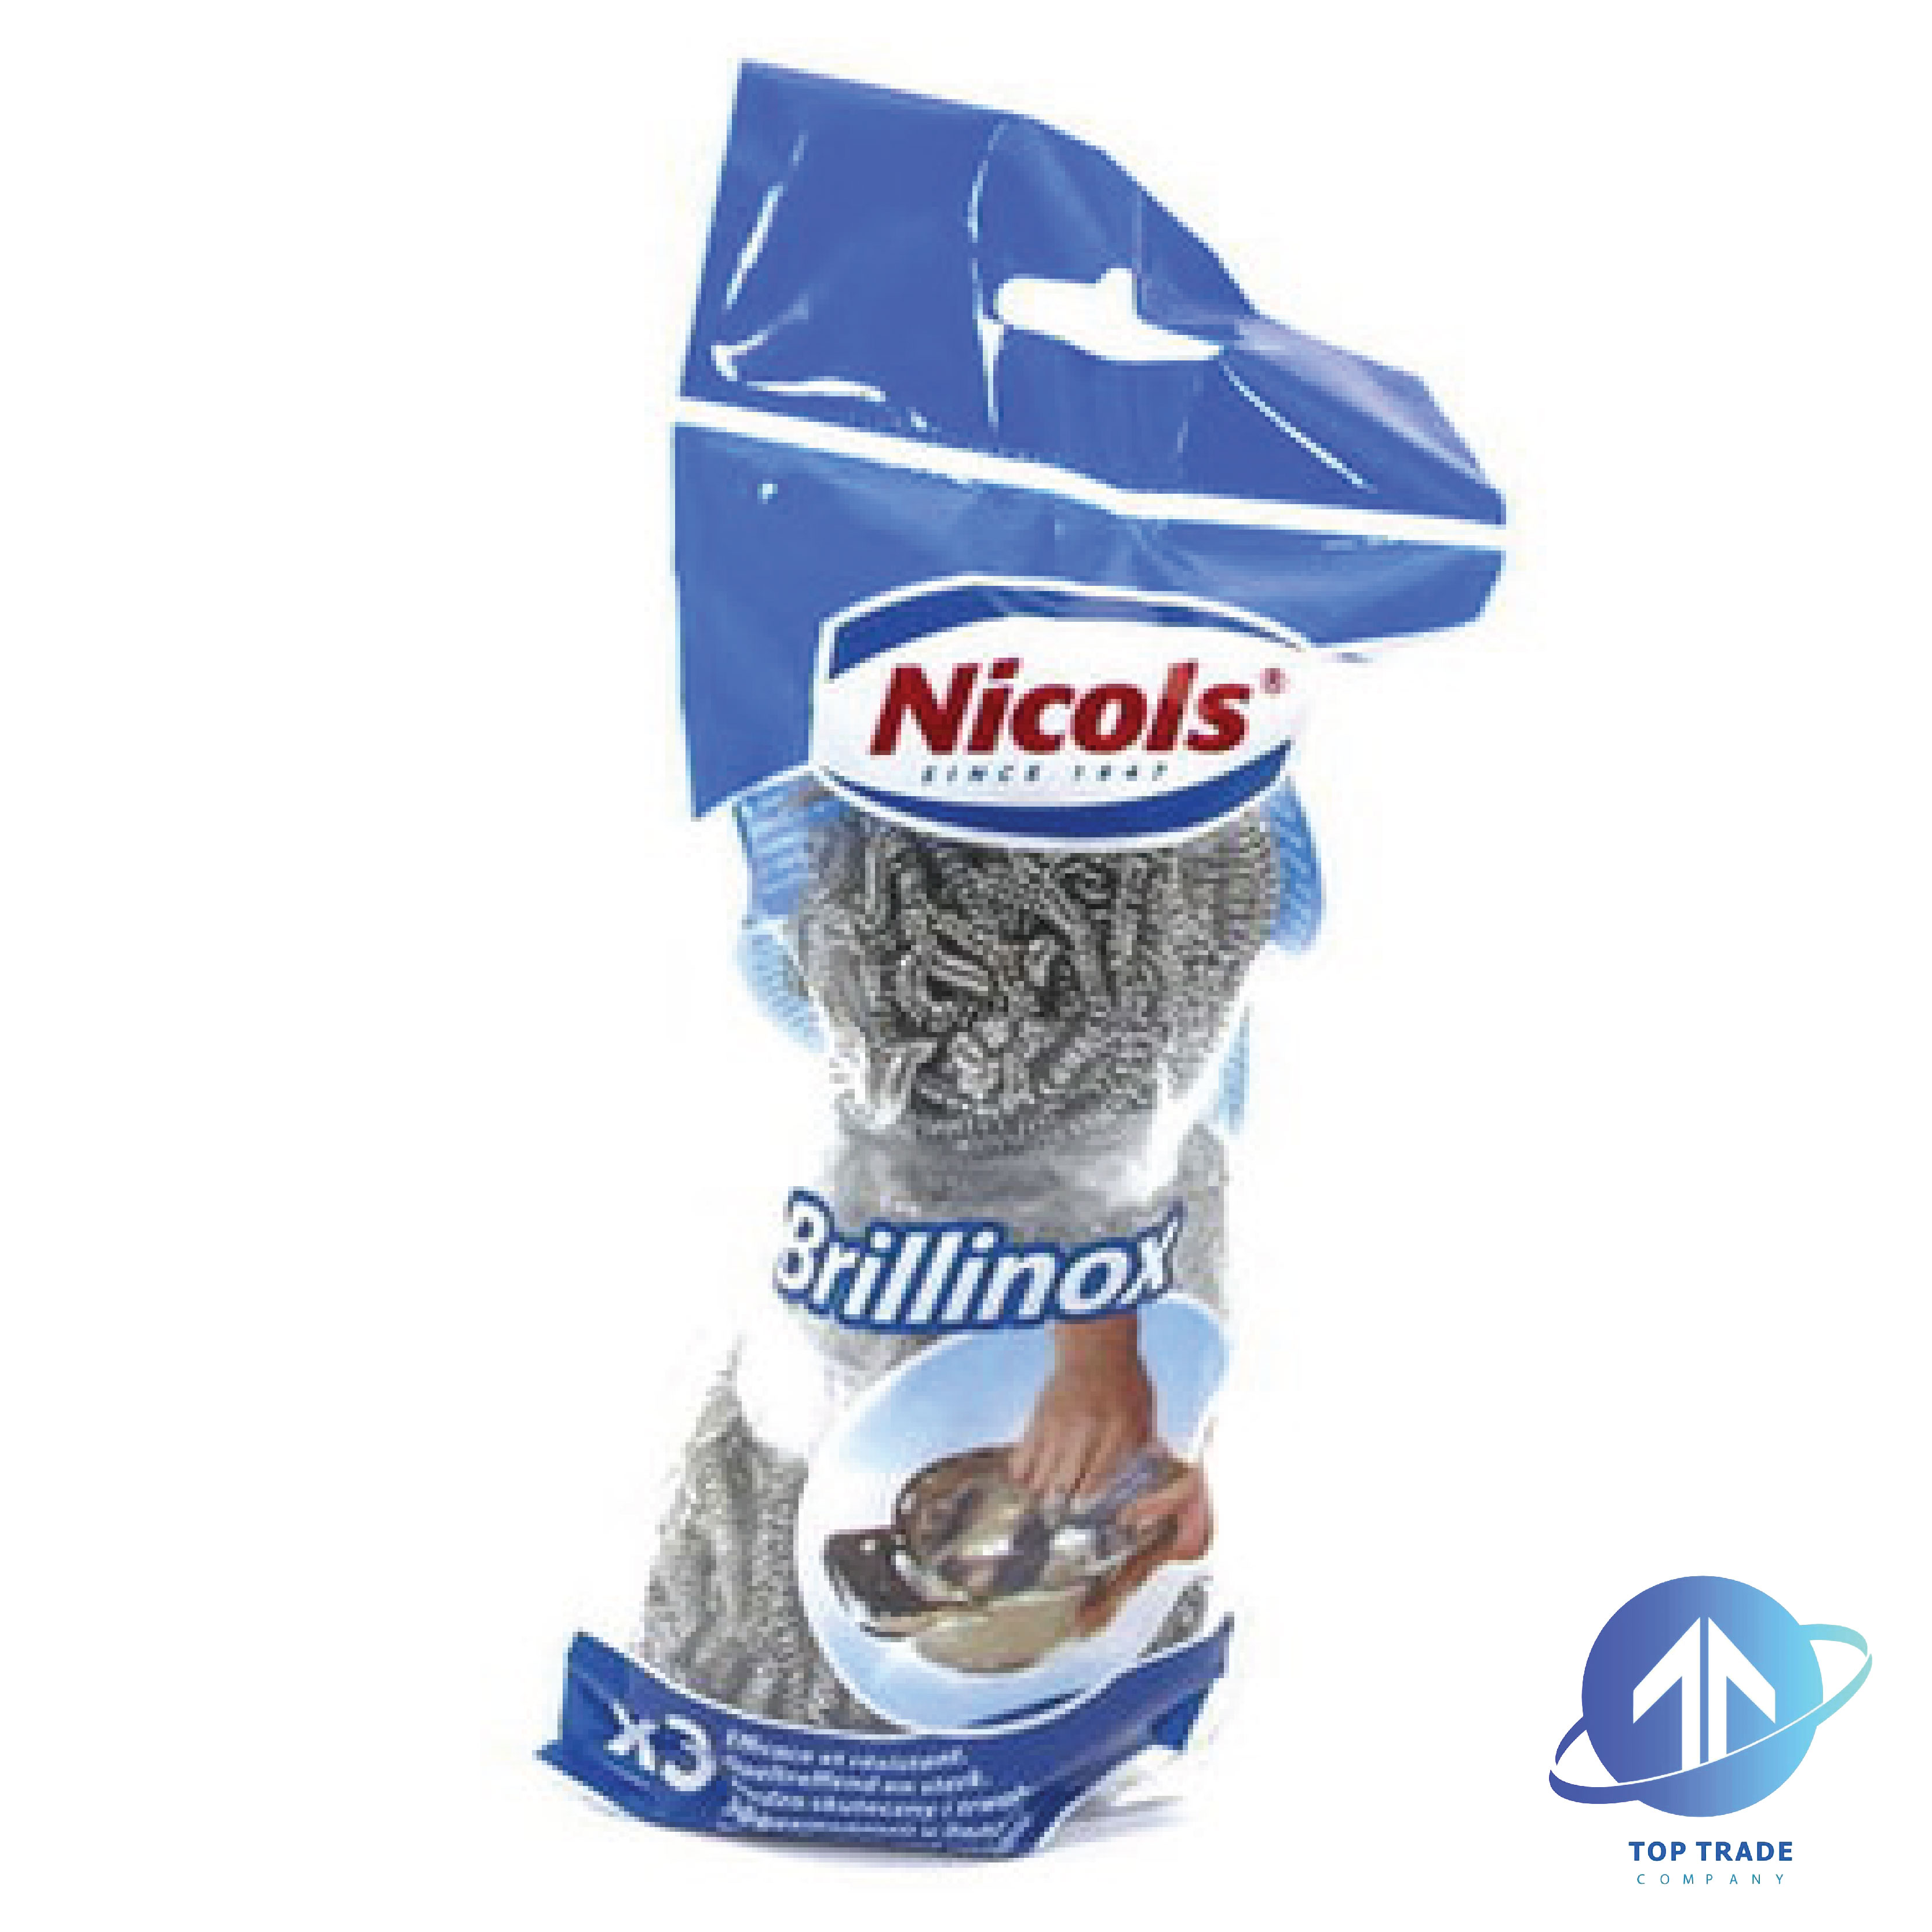 Nicols scouring pad metal netinox 3pcs